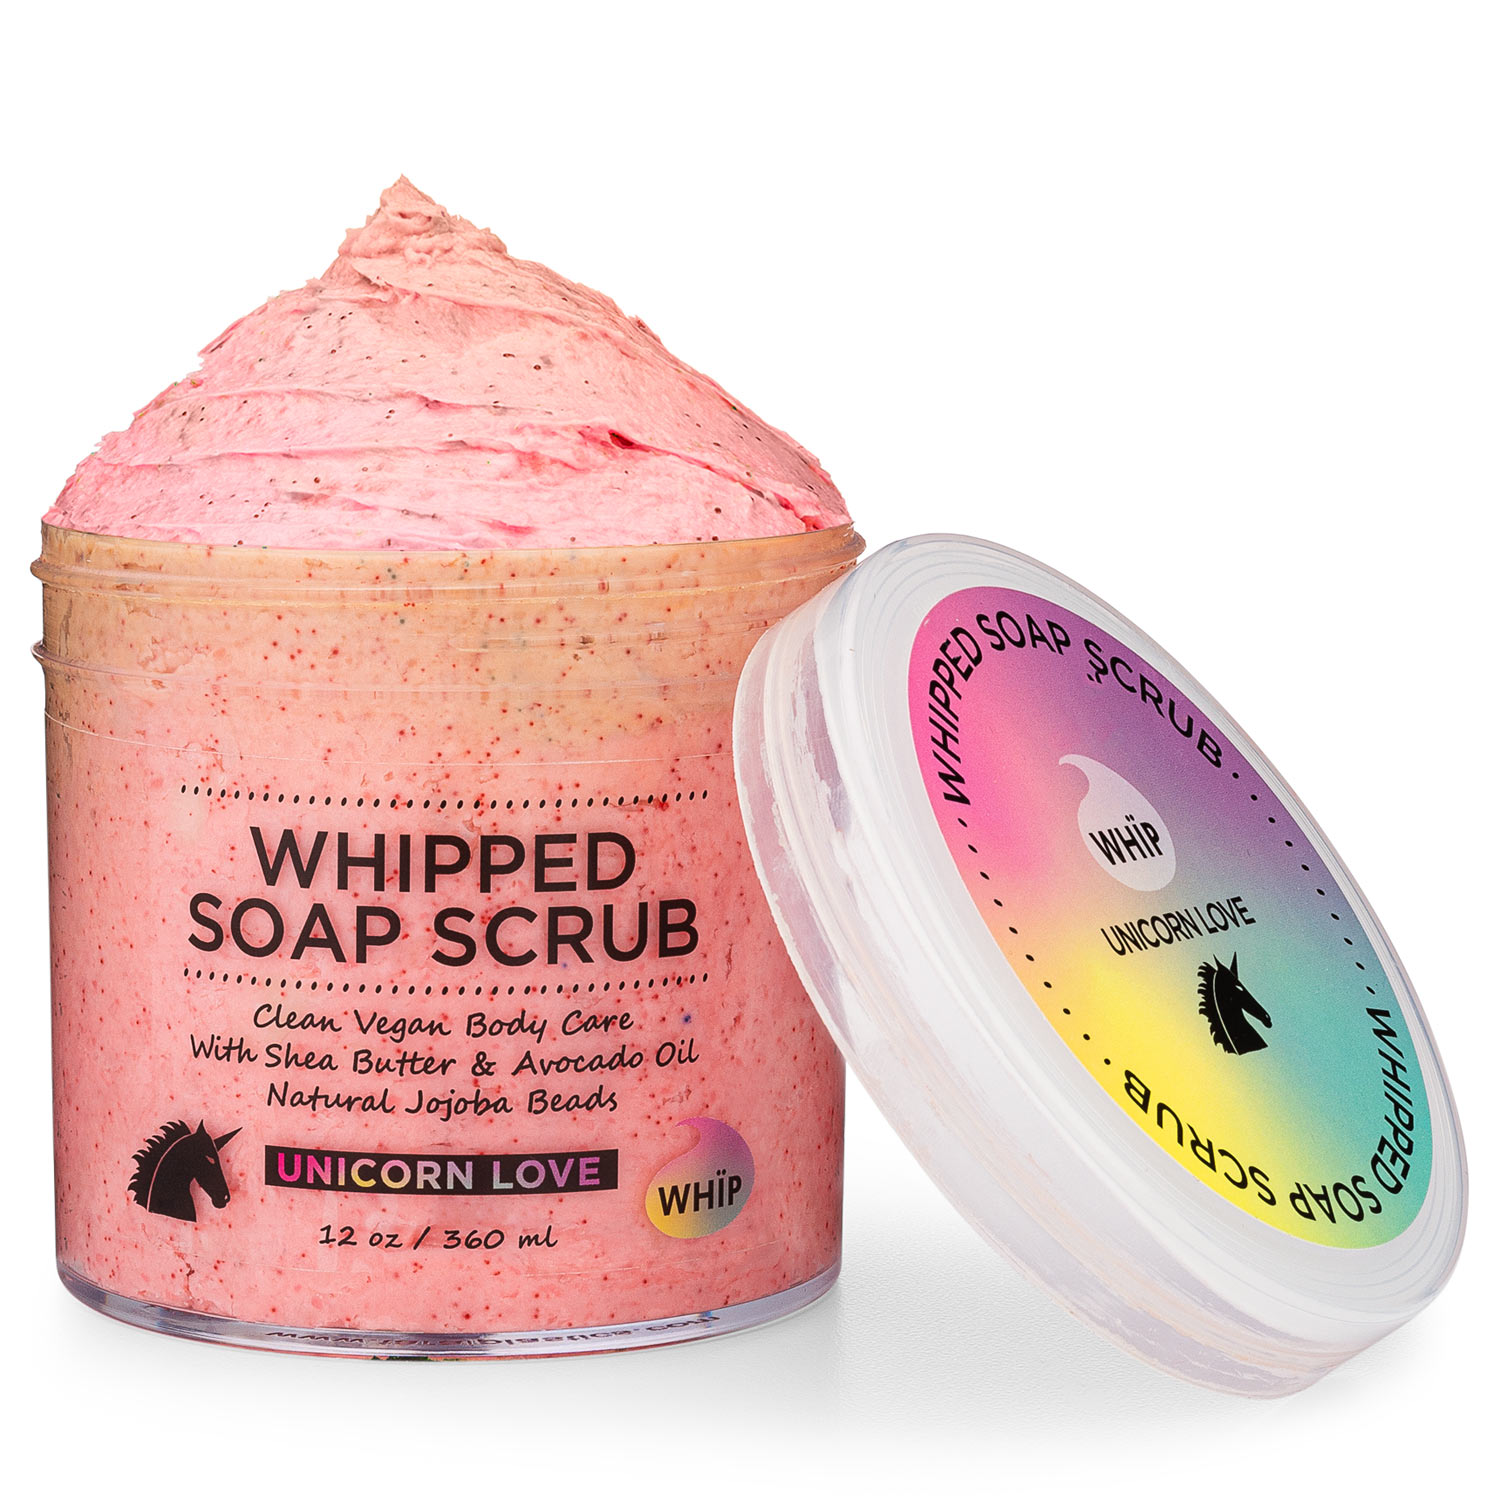 Whipped-Soap-Scrub---Unicorn-Love-WHÏP